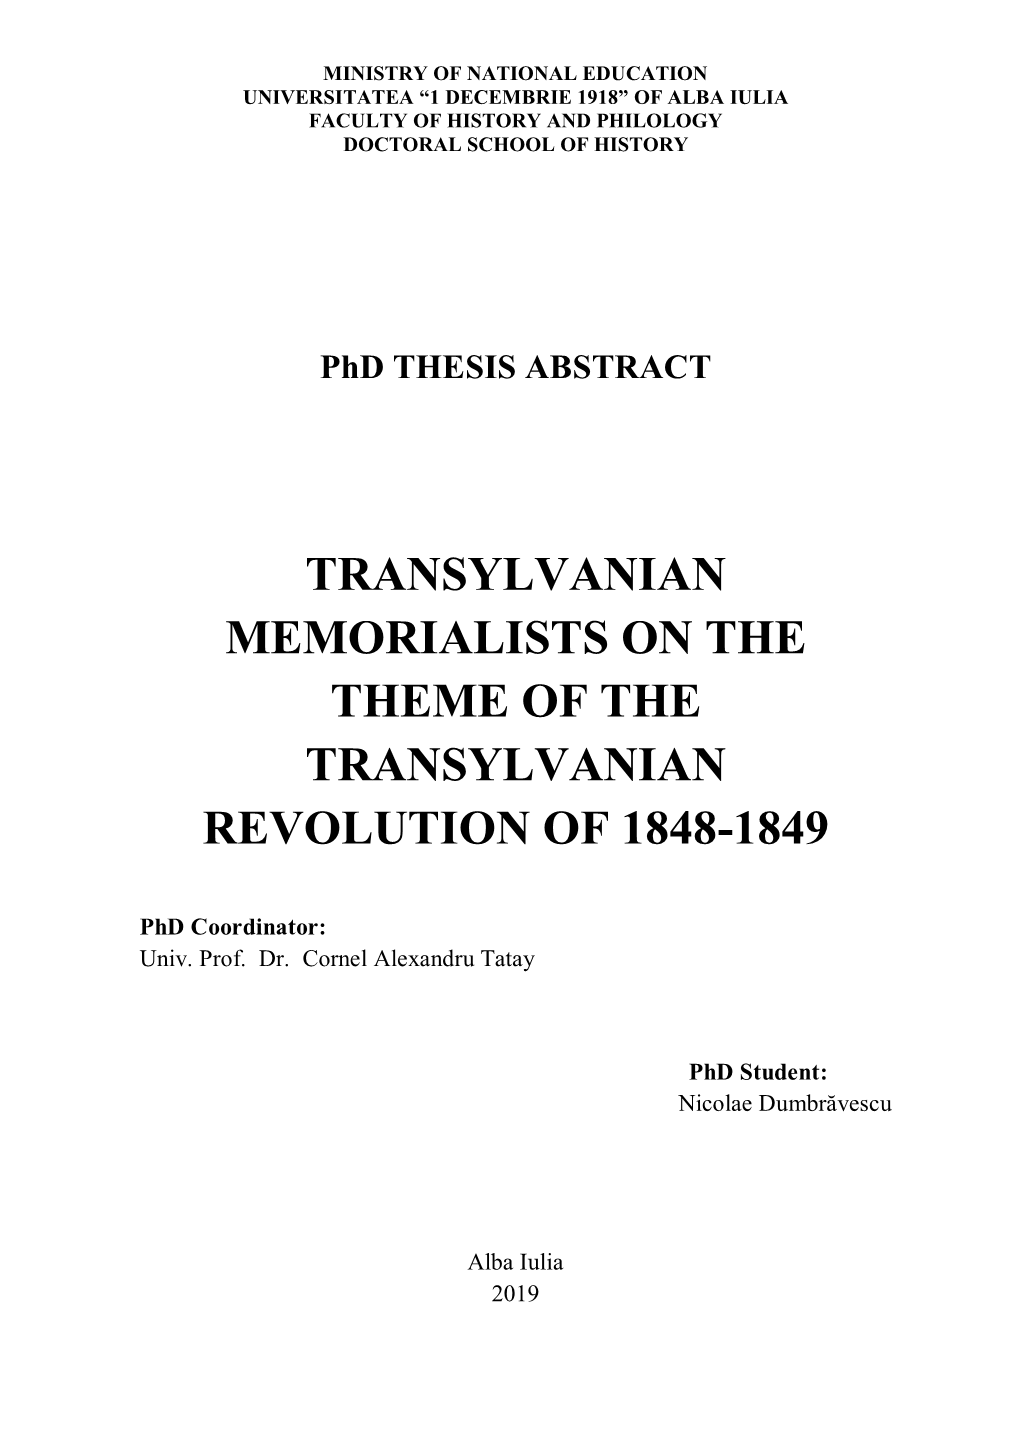 Transylvanian Memorialists on the Theme of the Transylvanian Revolution of 1848-1849